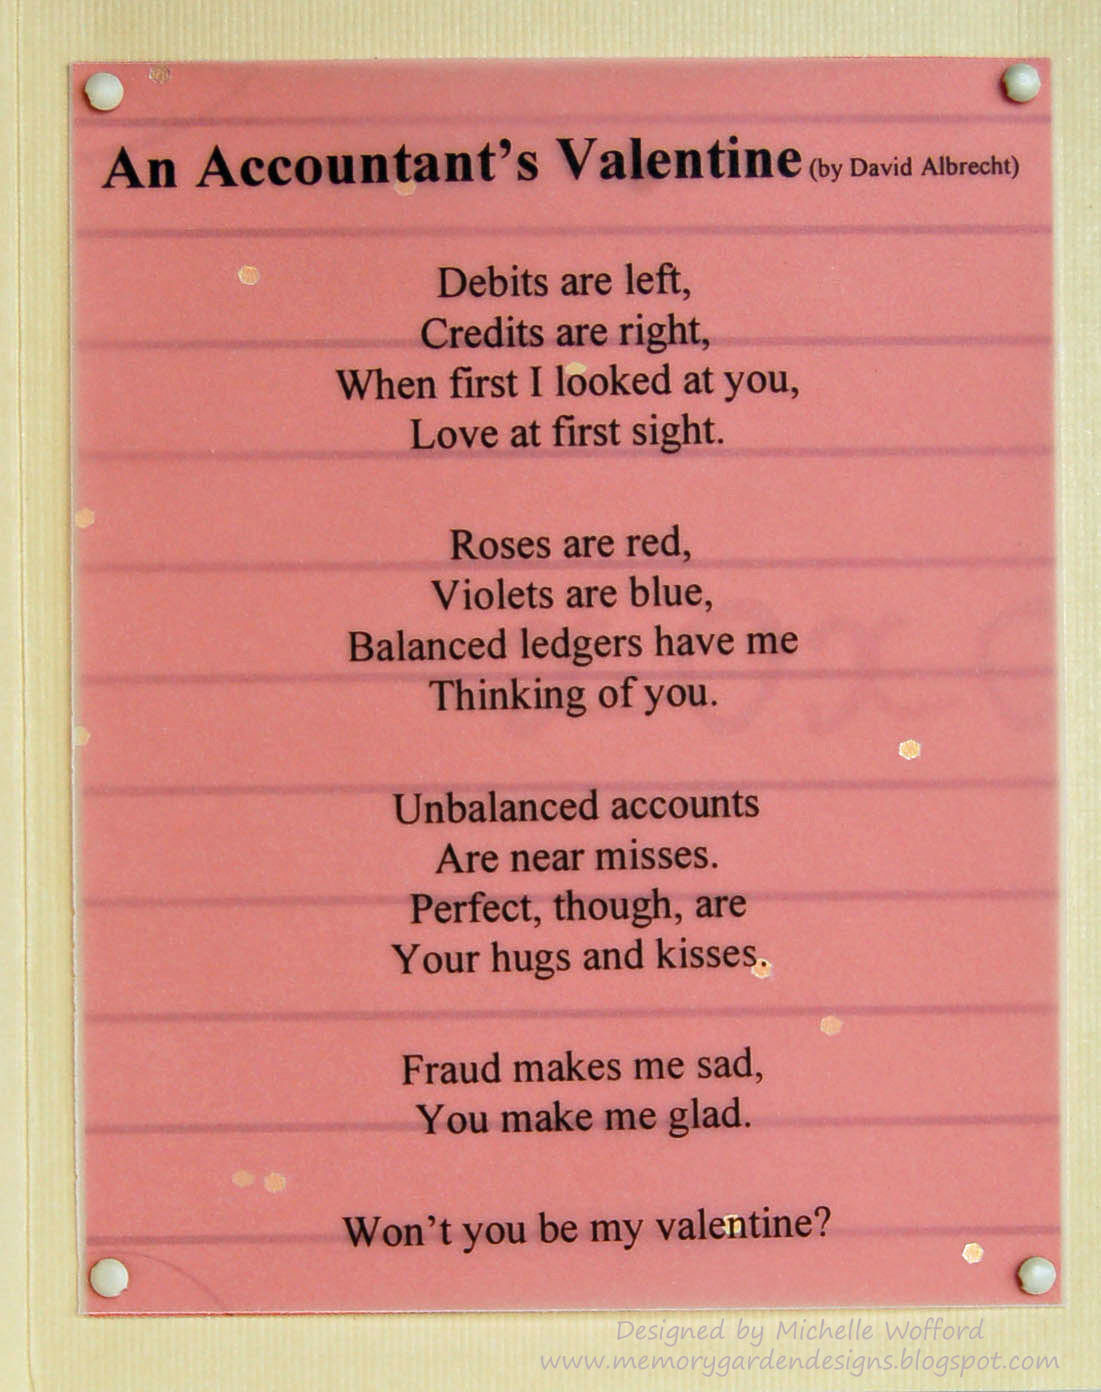 Memory Garden Designs: An Accountant's Valentine1101 x 1392